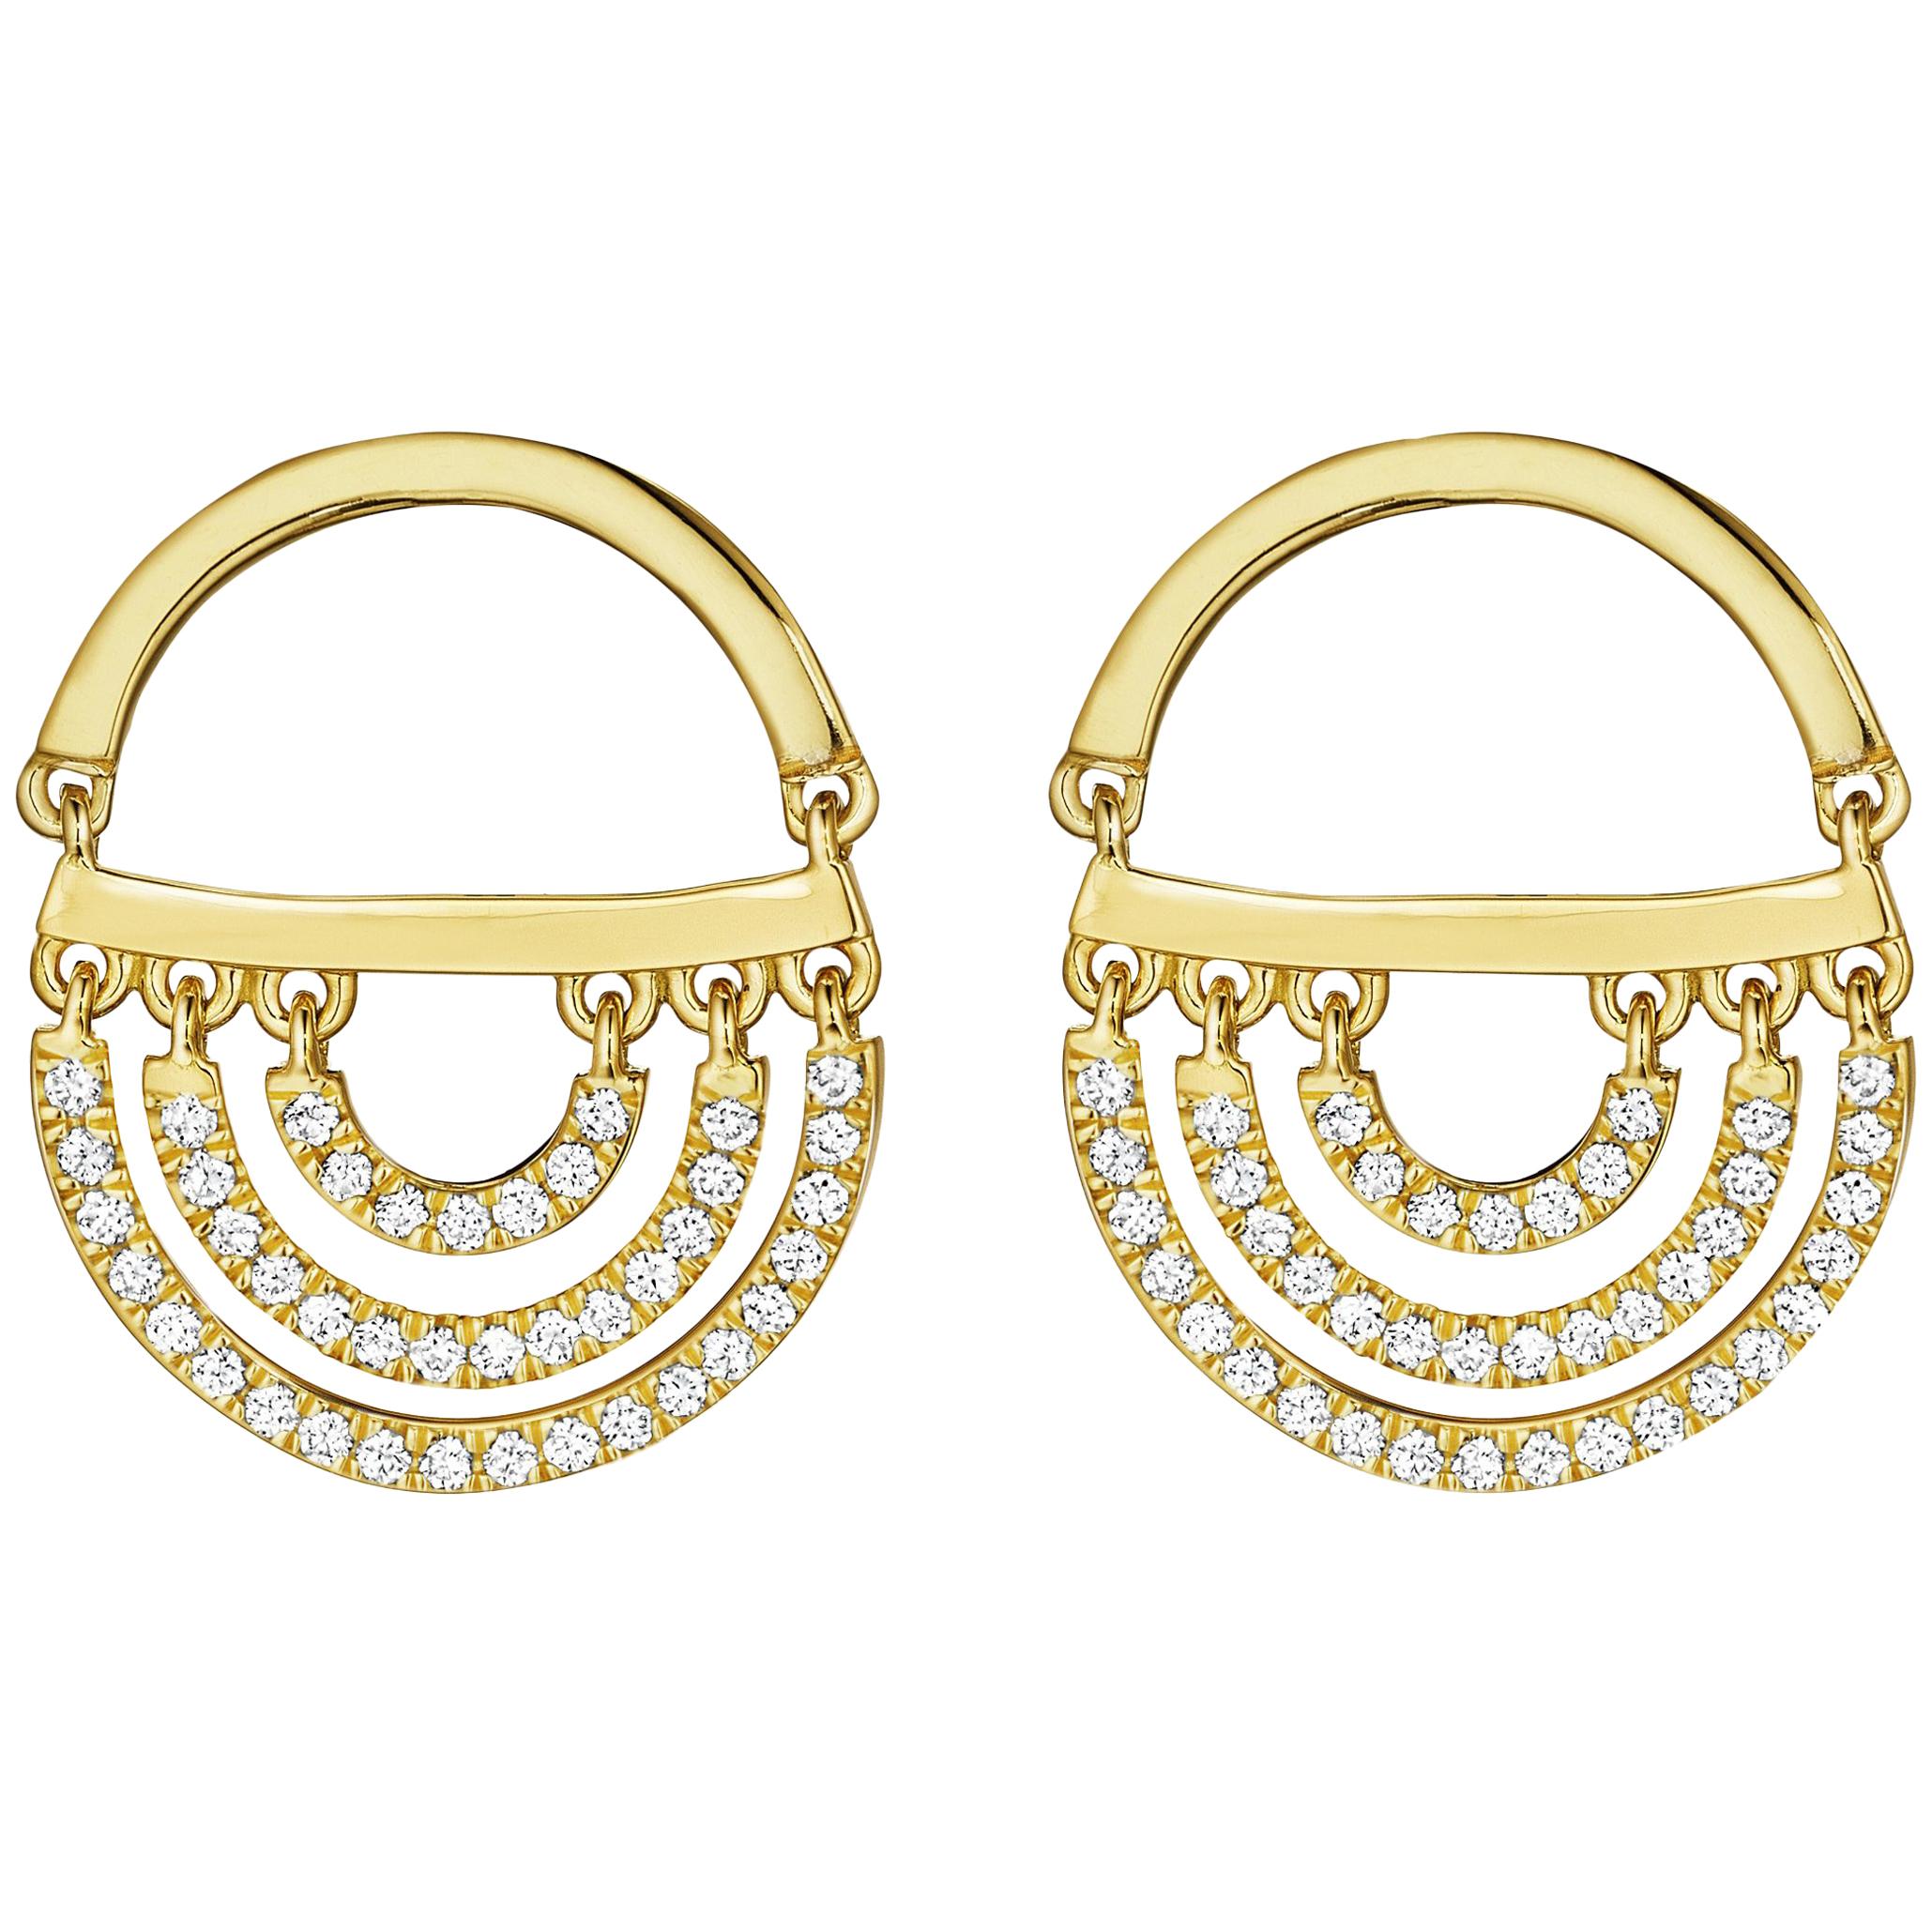 CADAR Twin Drop Earrings, 18K Yellow Gold and White Diamonds